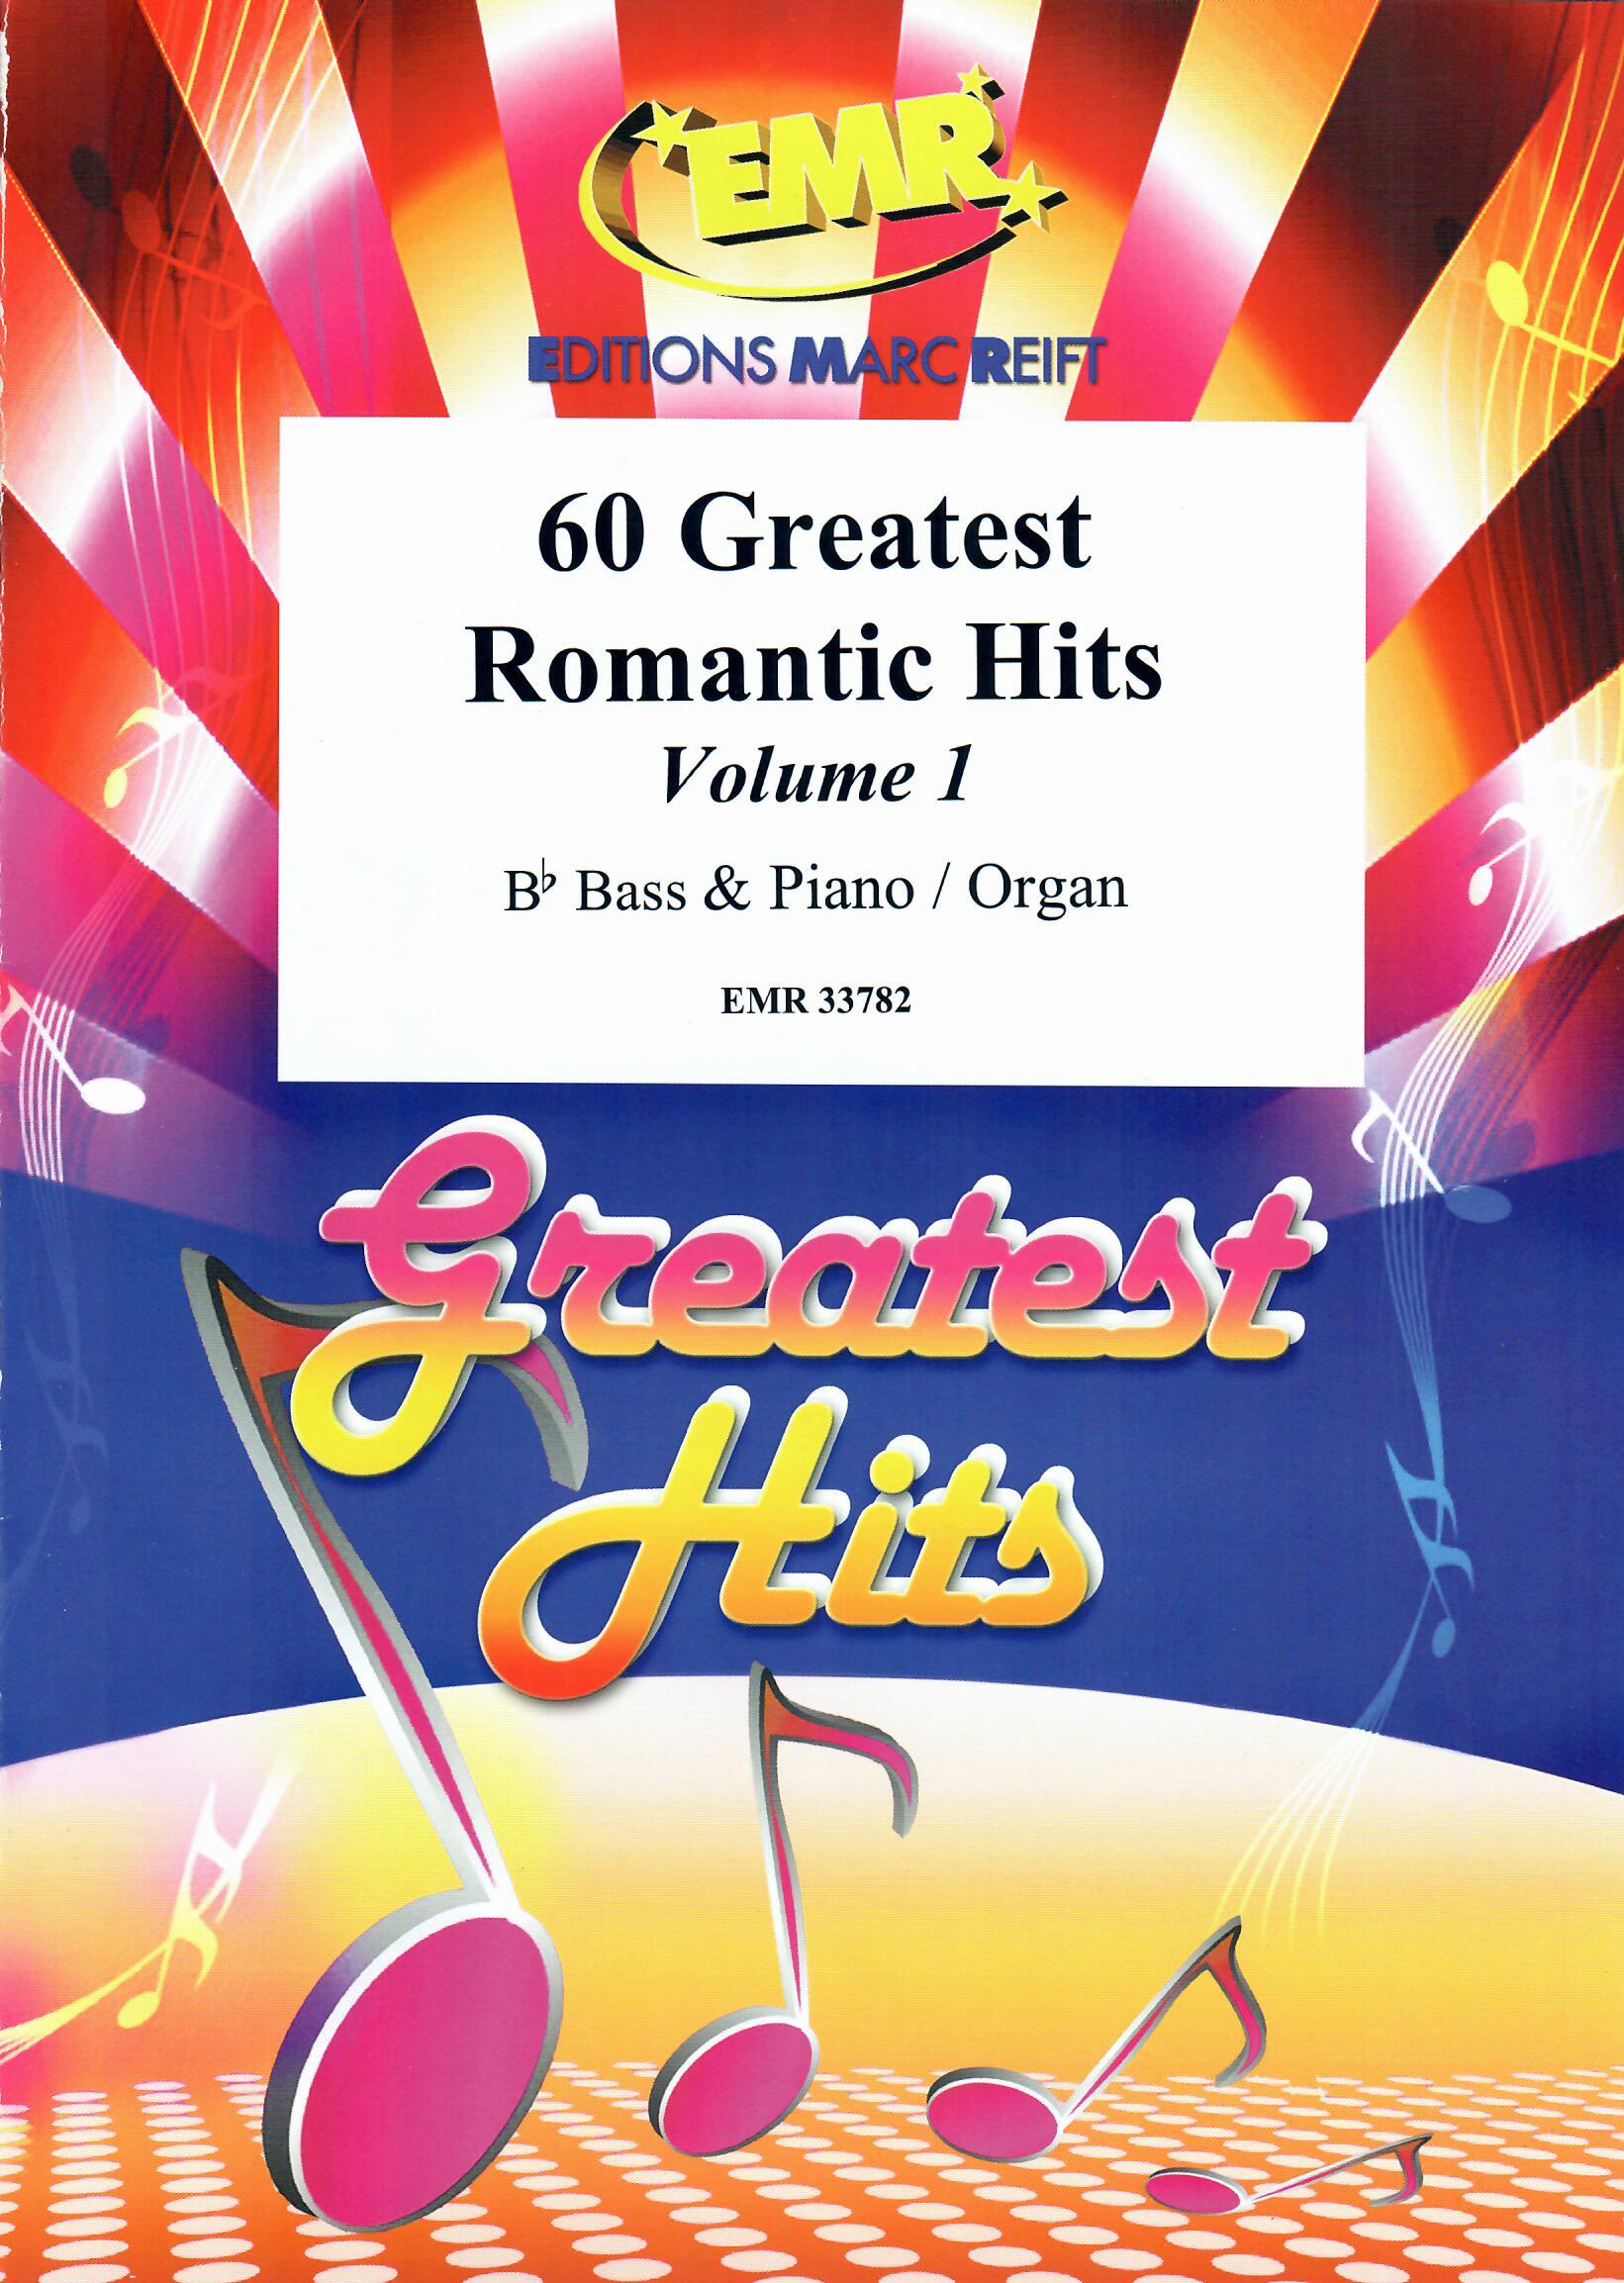 60 GREATEST ROMANTIC HITS VOLUME 1, SOLOS - E♭. Bass